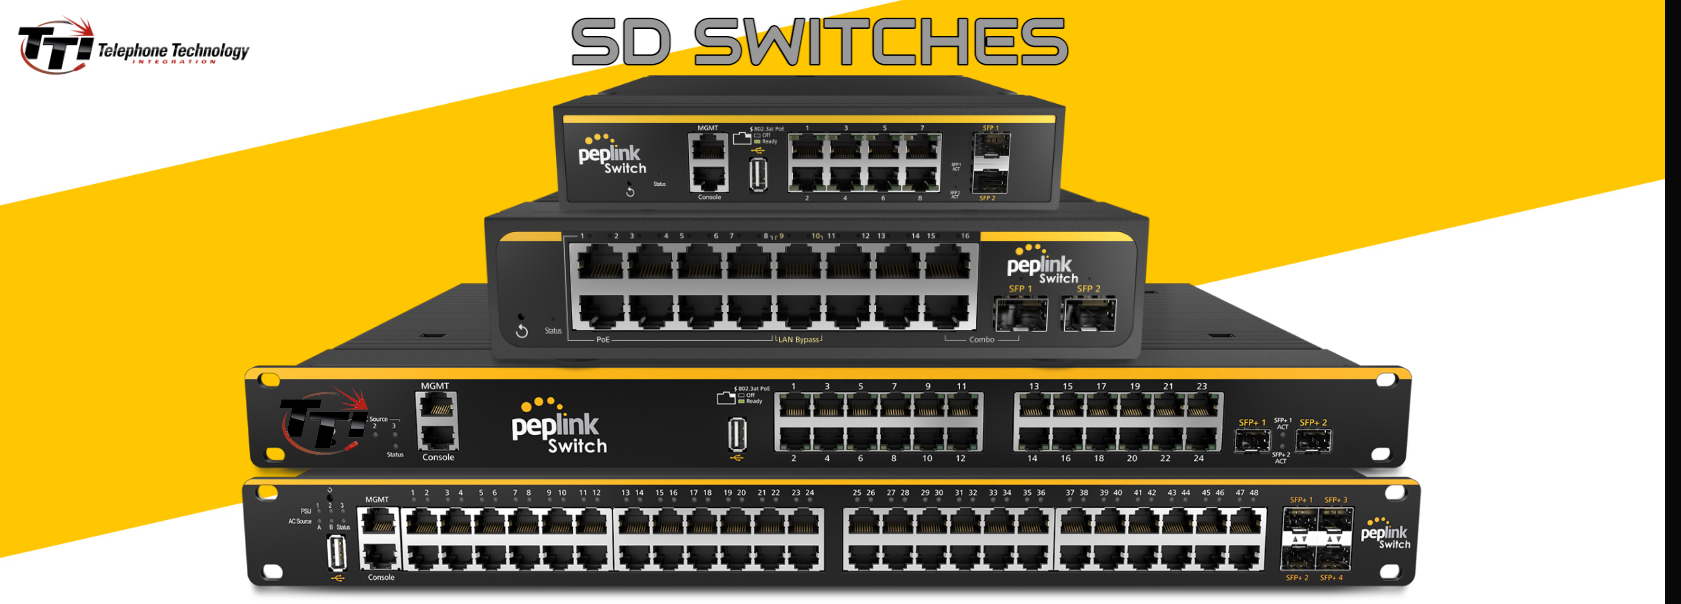 Peplink SD Switches